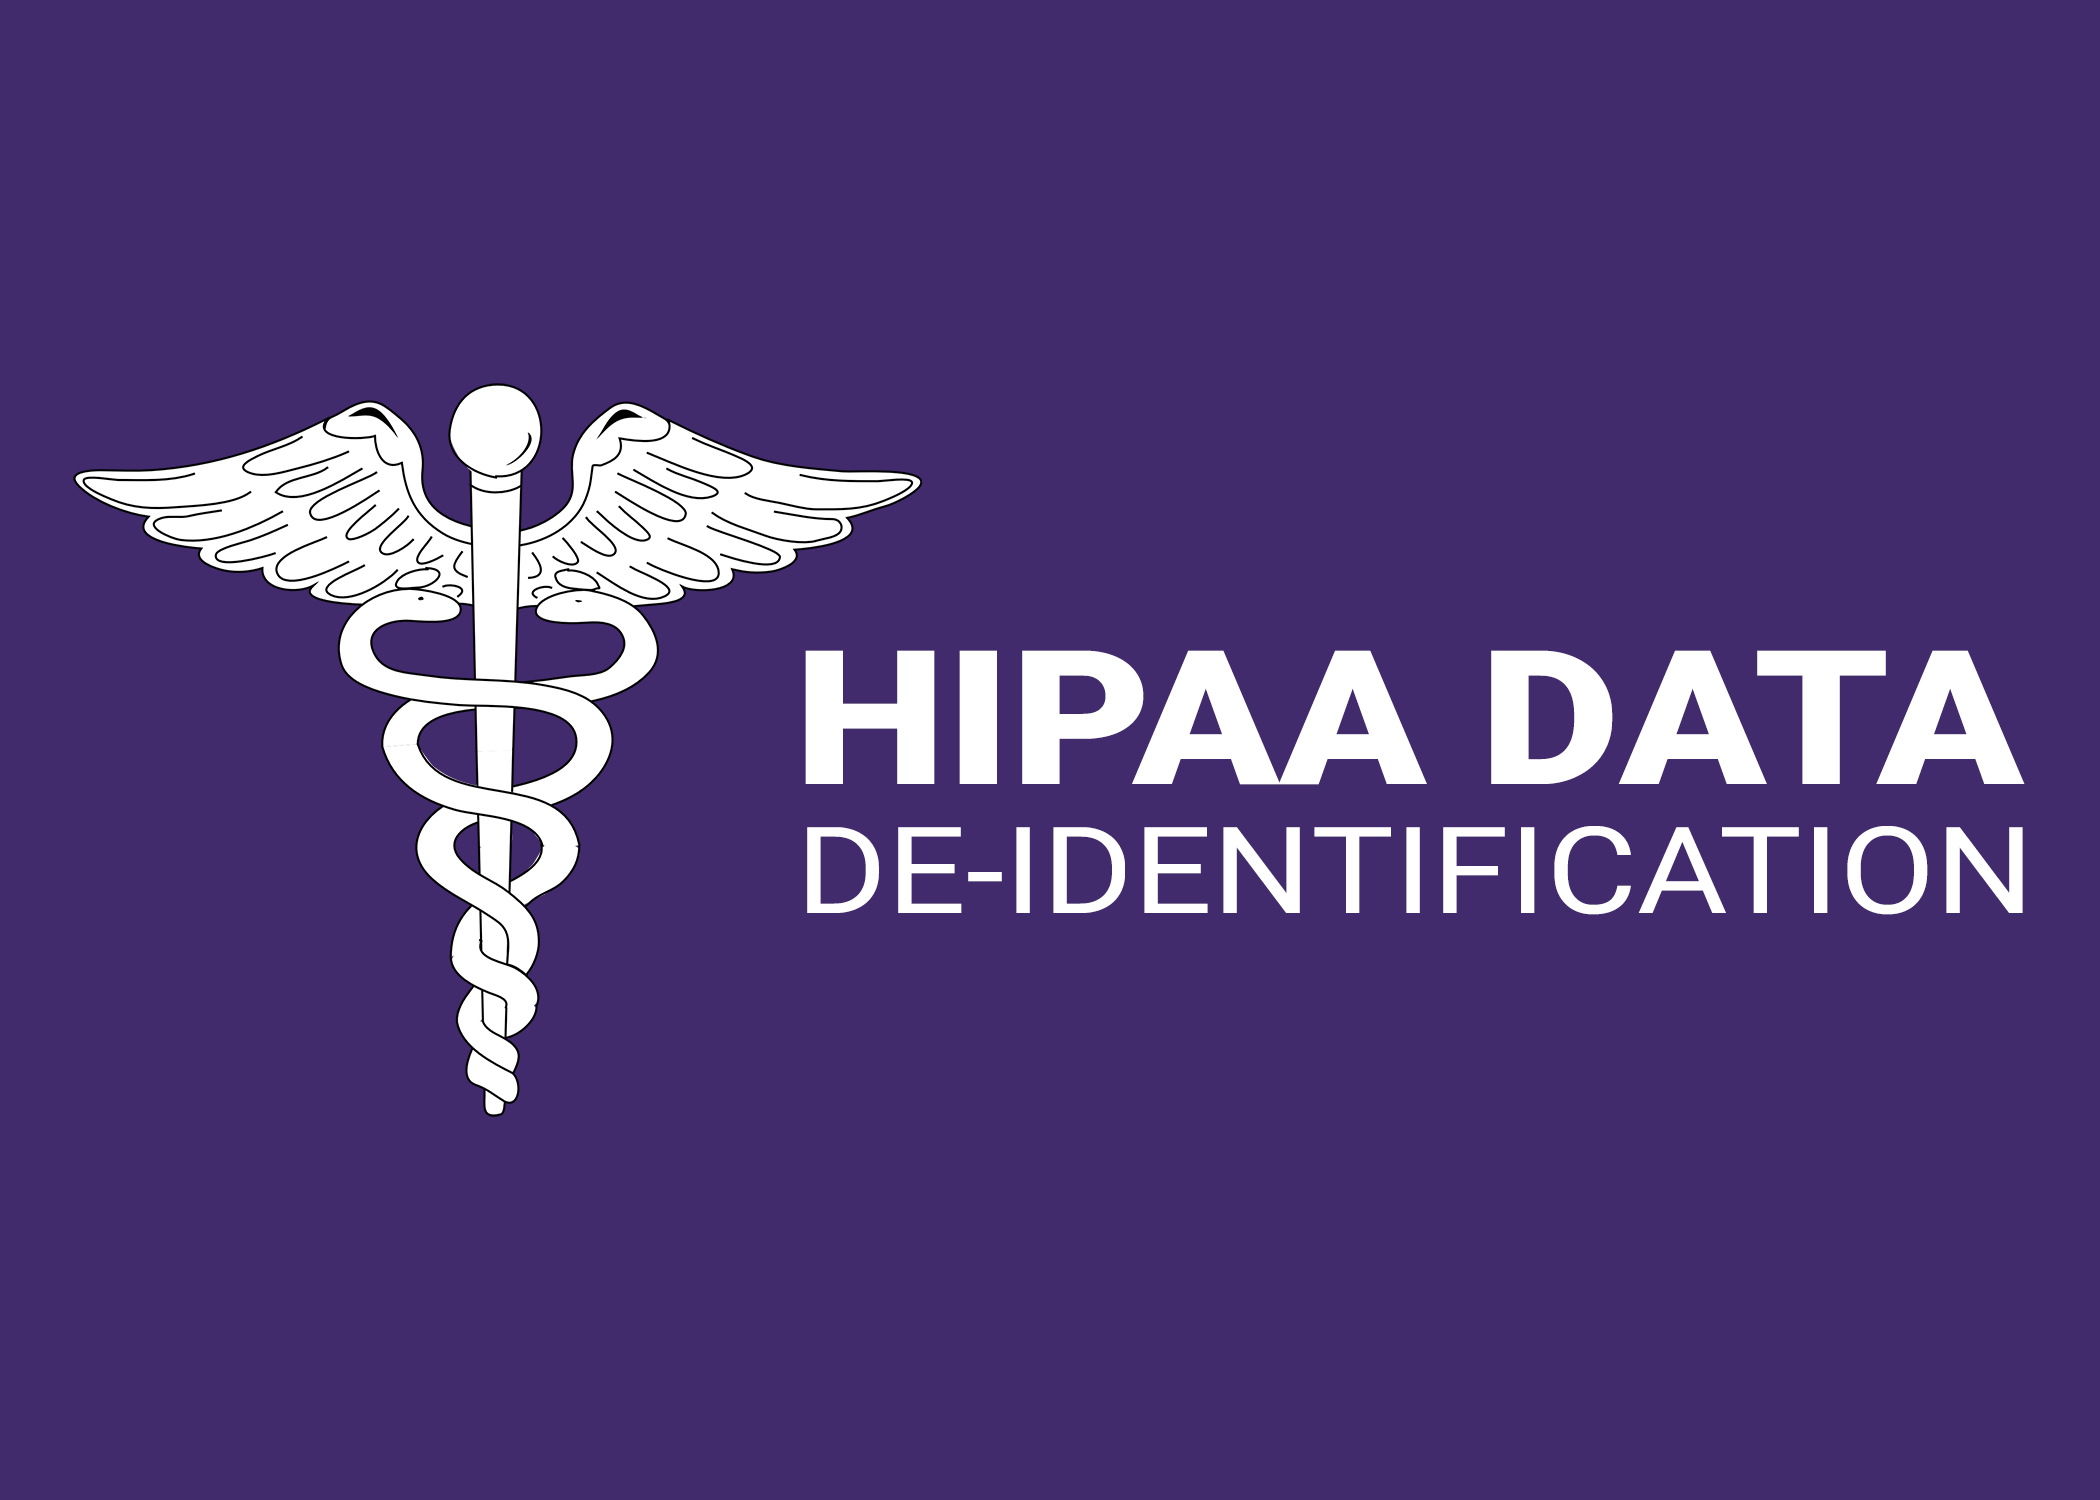 Data De-identification and HIPAA